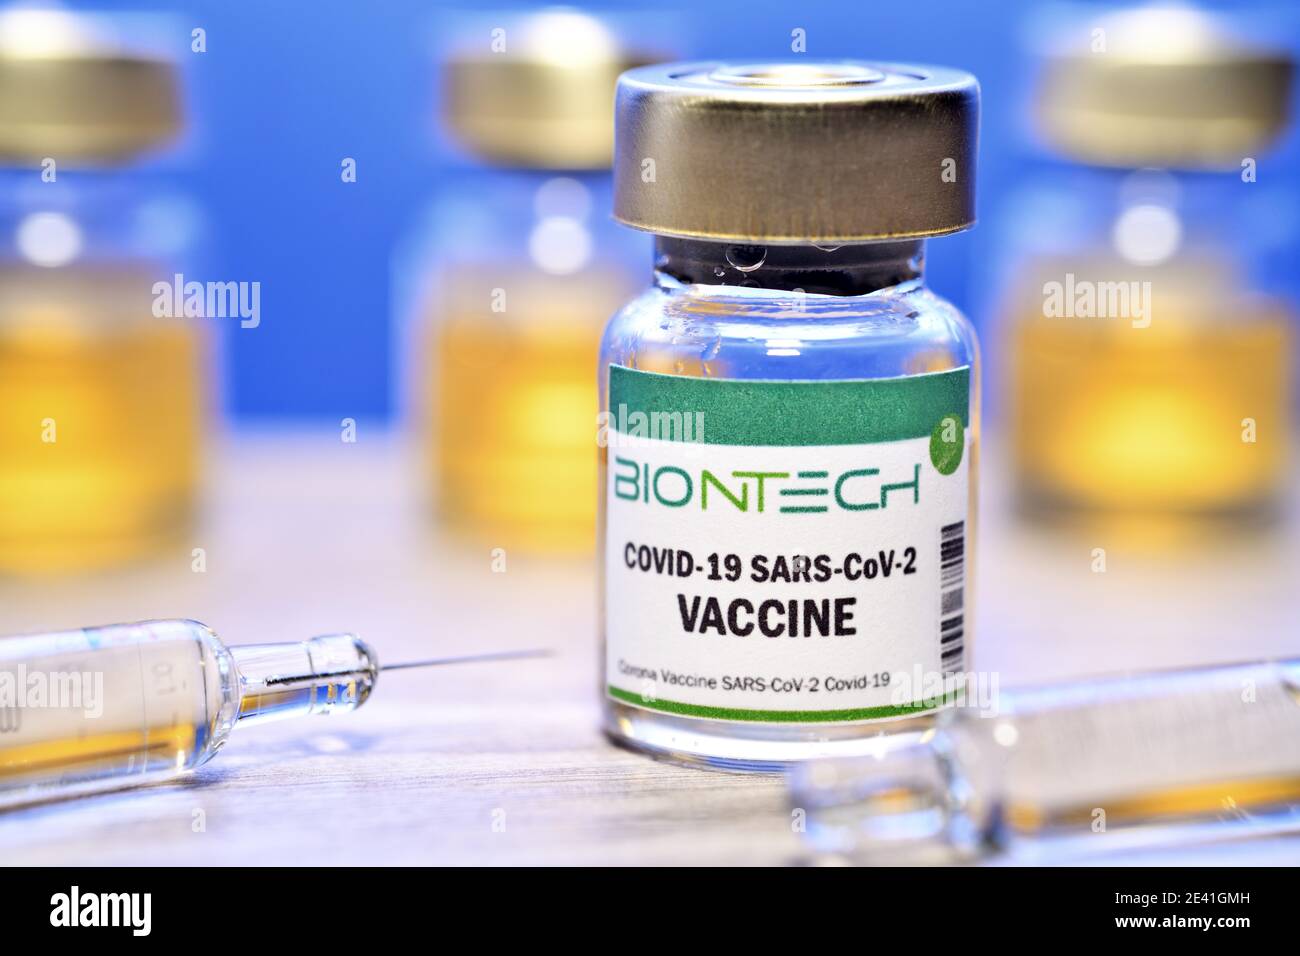 Biontech Covid Vaccine, Symbolic Image Stock Photo